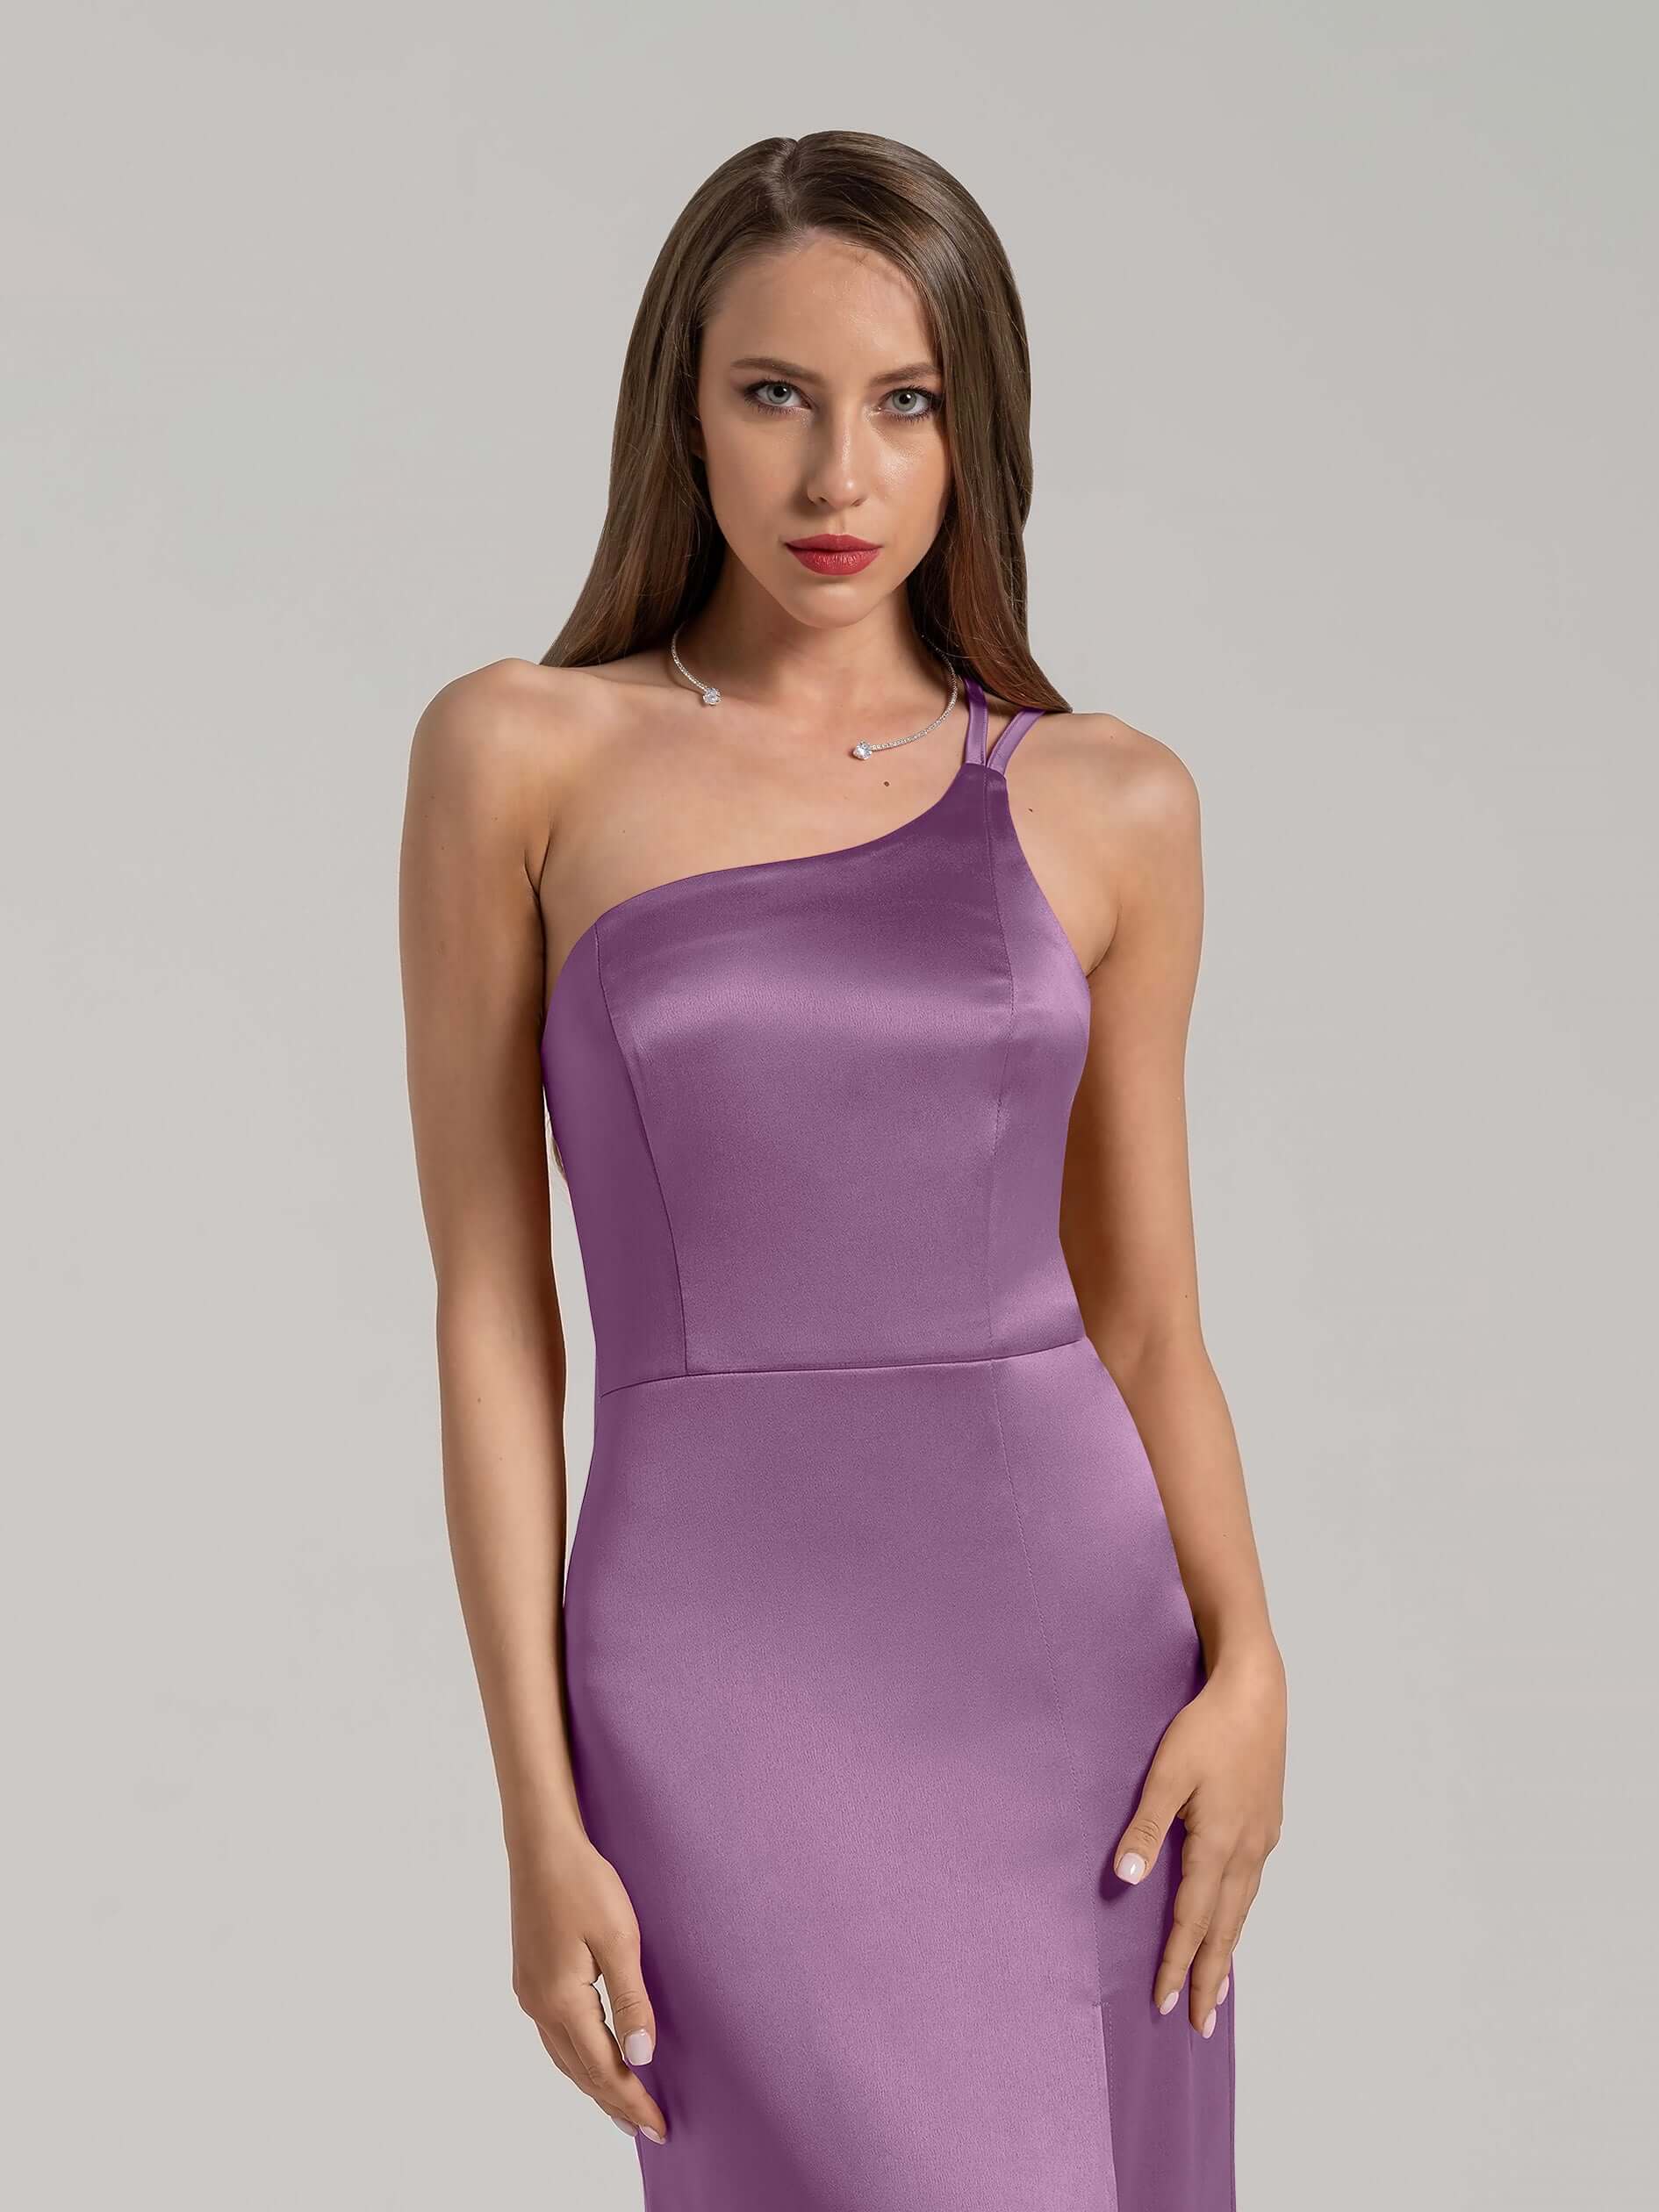 Goddess of Love Long Gown - Posh Purple by Tia Dorraine Women's Luxury Fashion Designer Clothing Brand